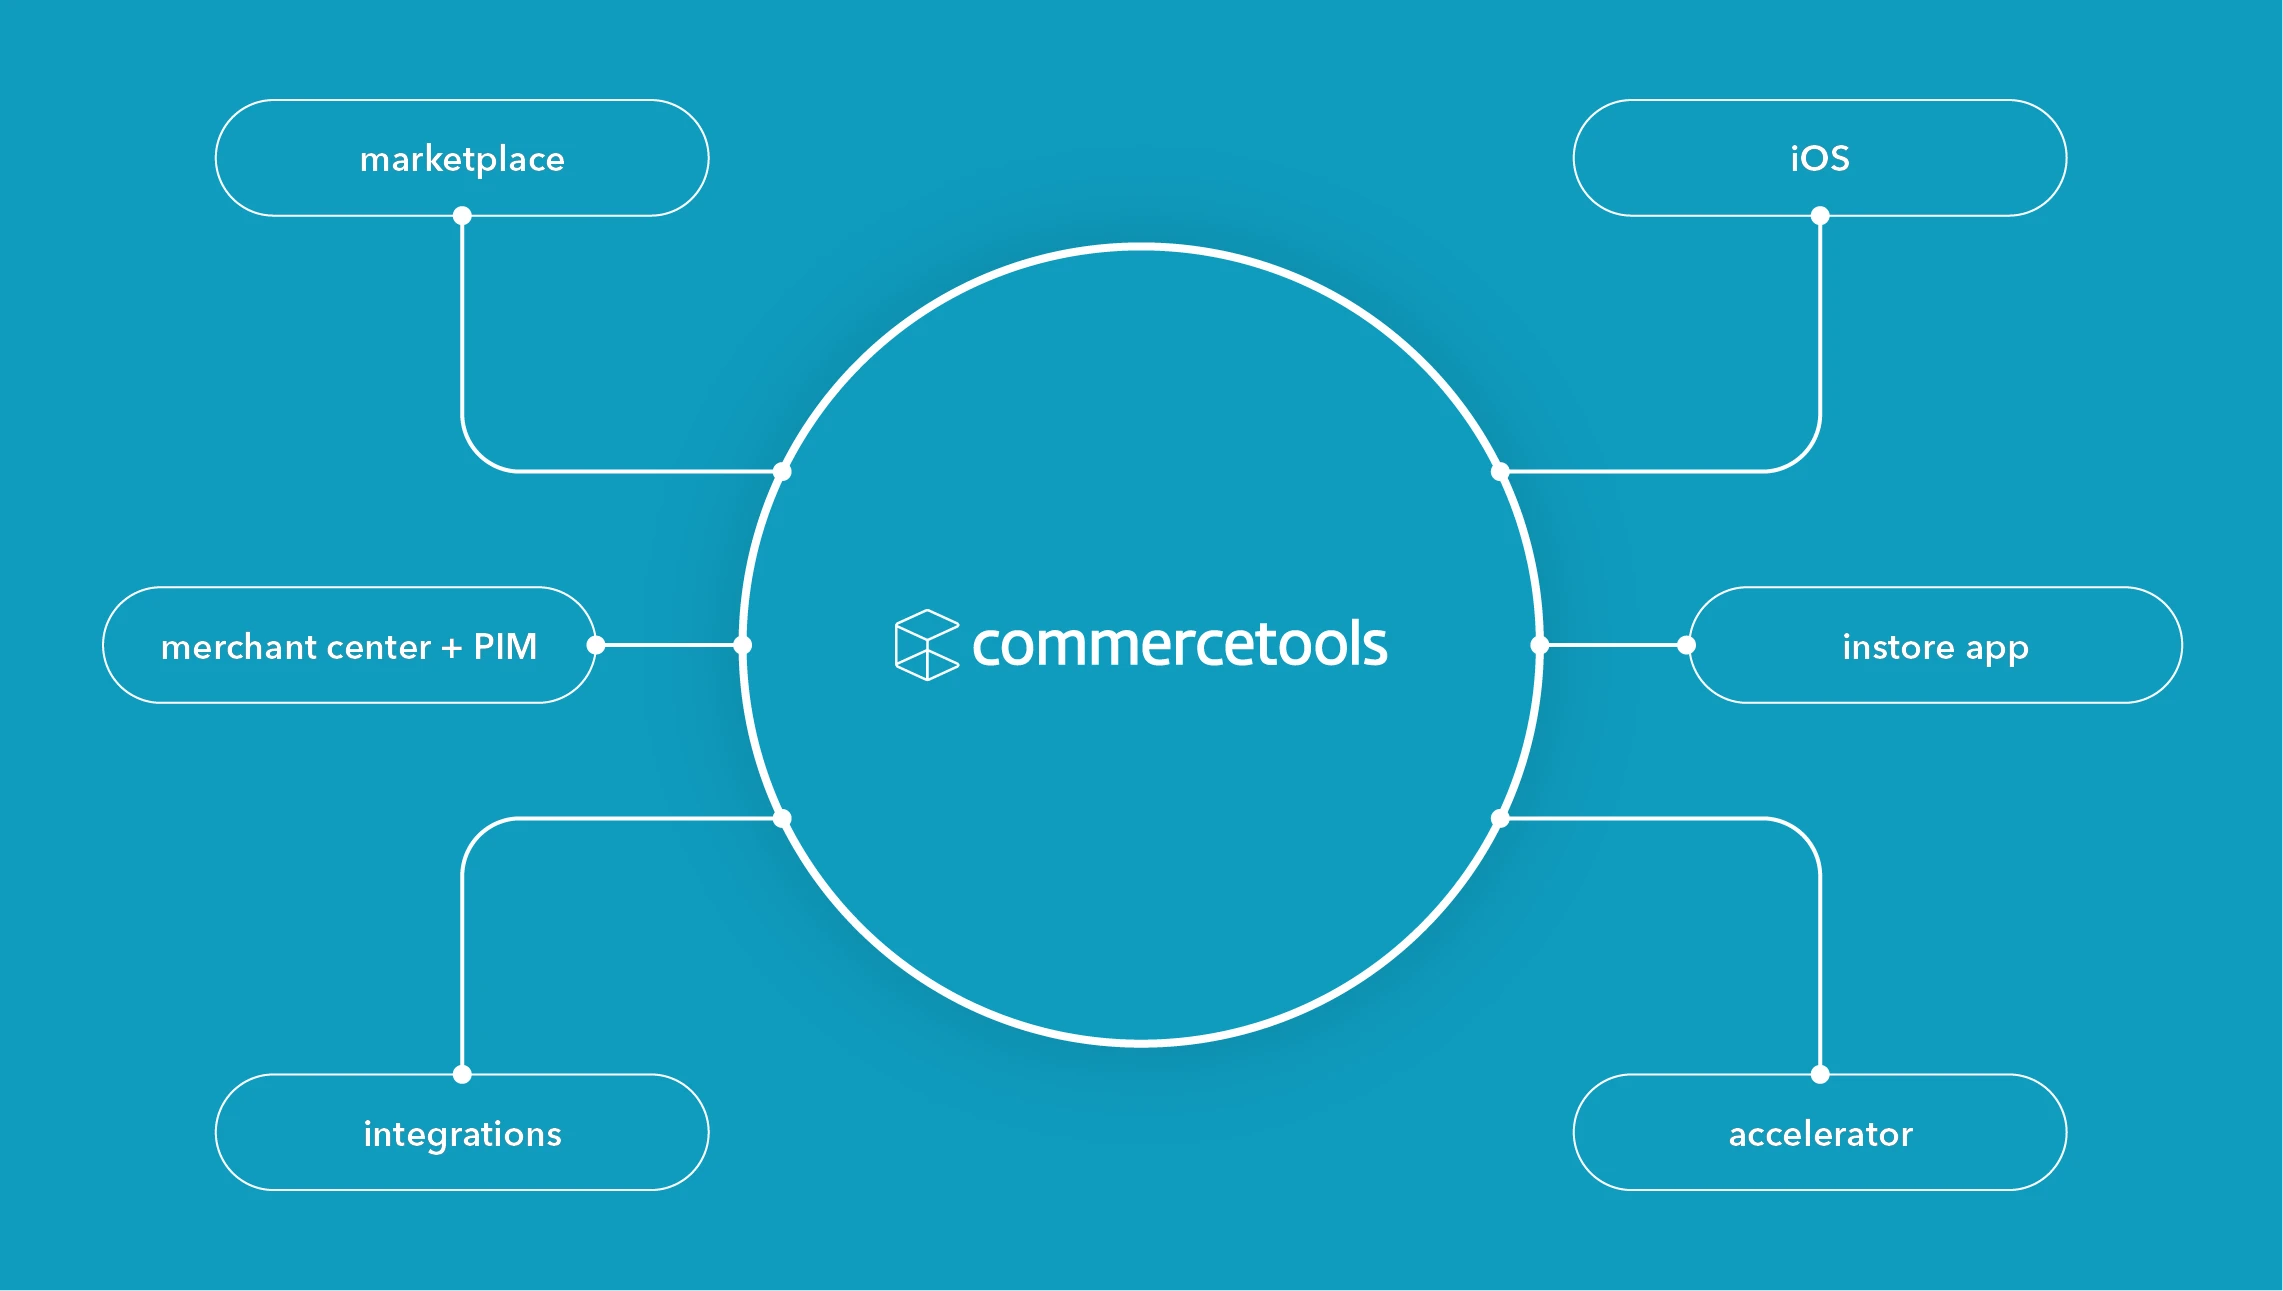 Konsequent, modern, innovativ – Das E-Commerce System commercetools